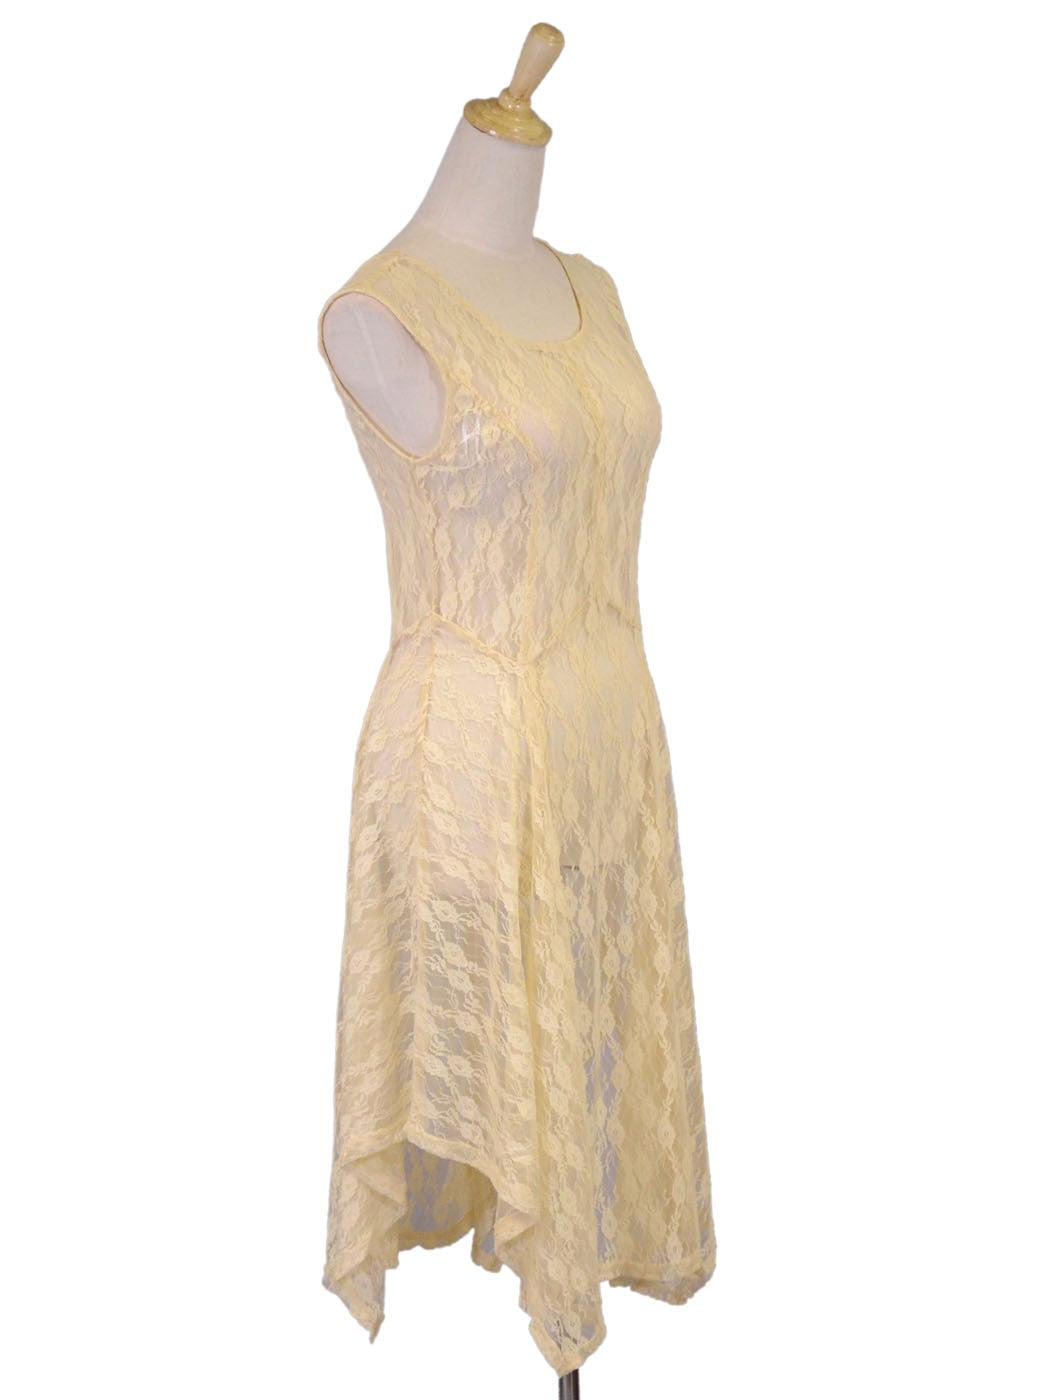 En Creme Lovely Feminine Lace Floral Sheer Circle Skirt Delicate Dress